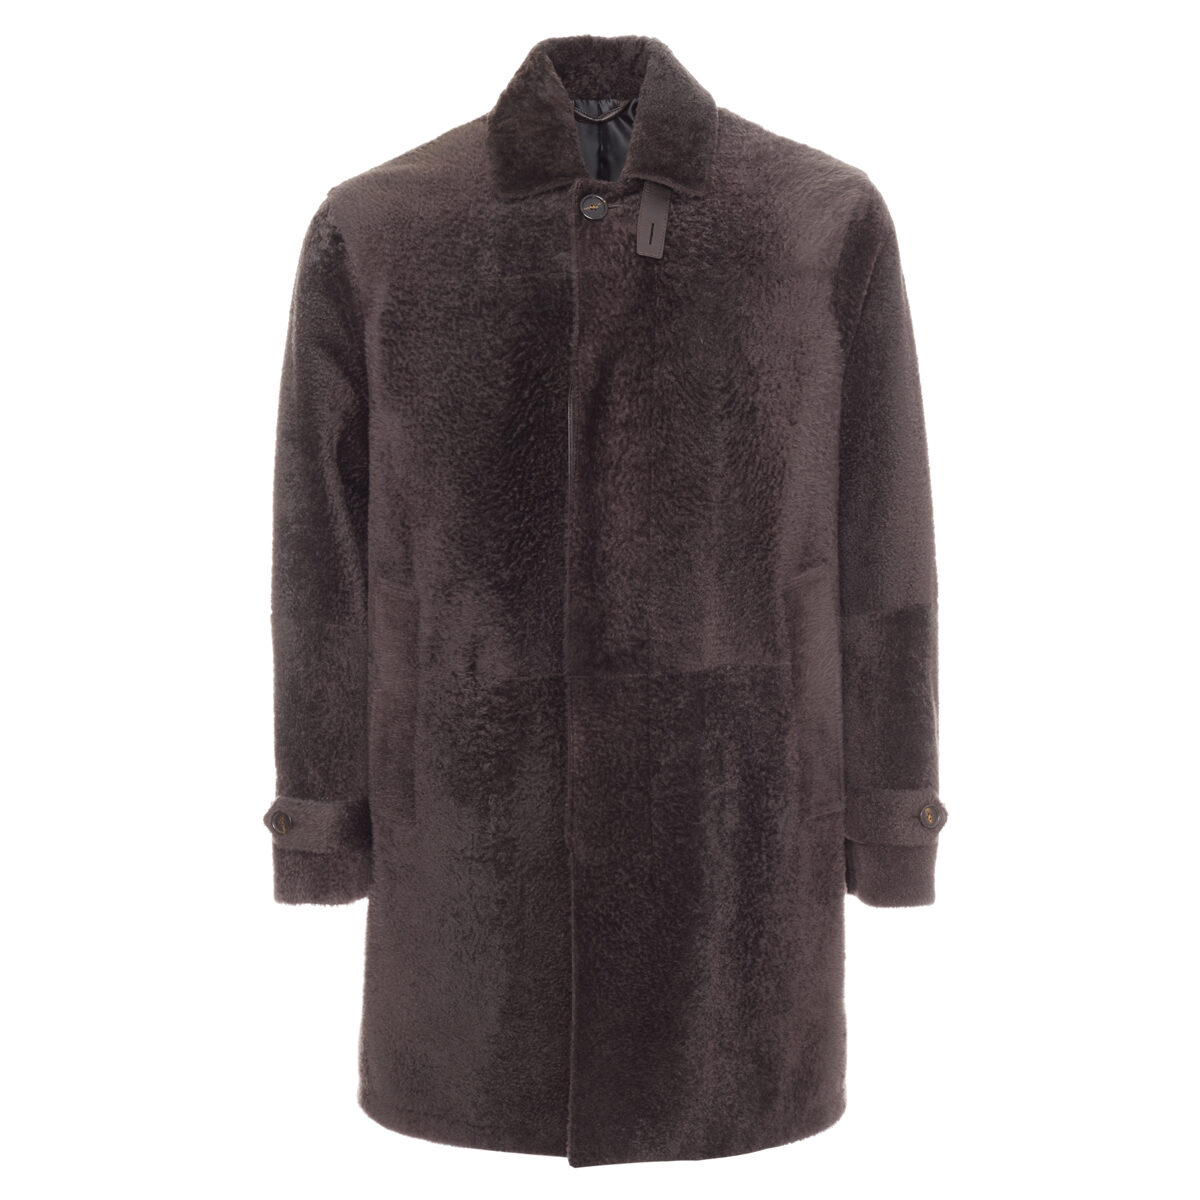 Brioni shearling coat